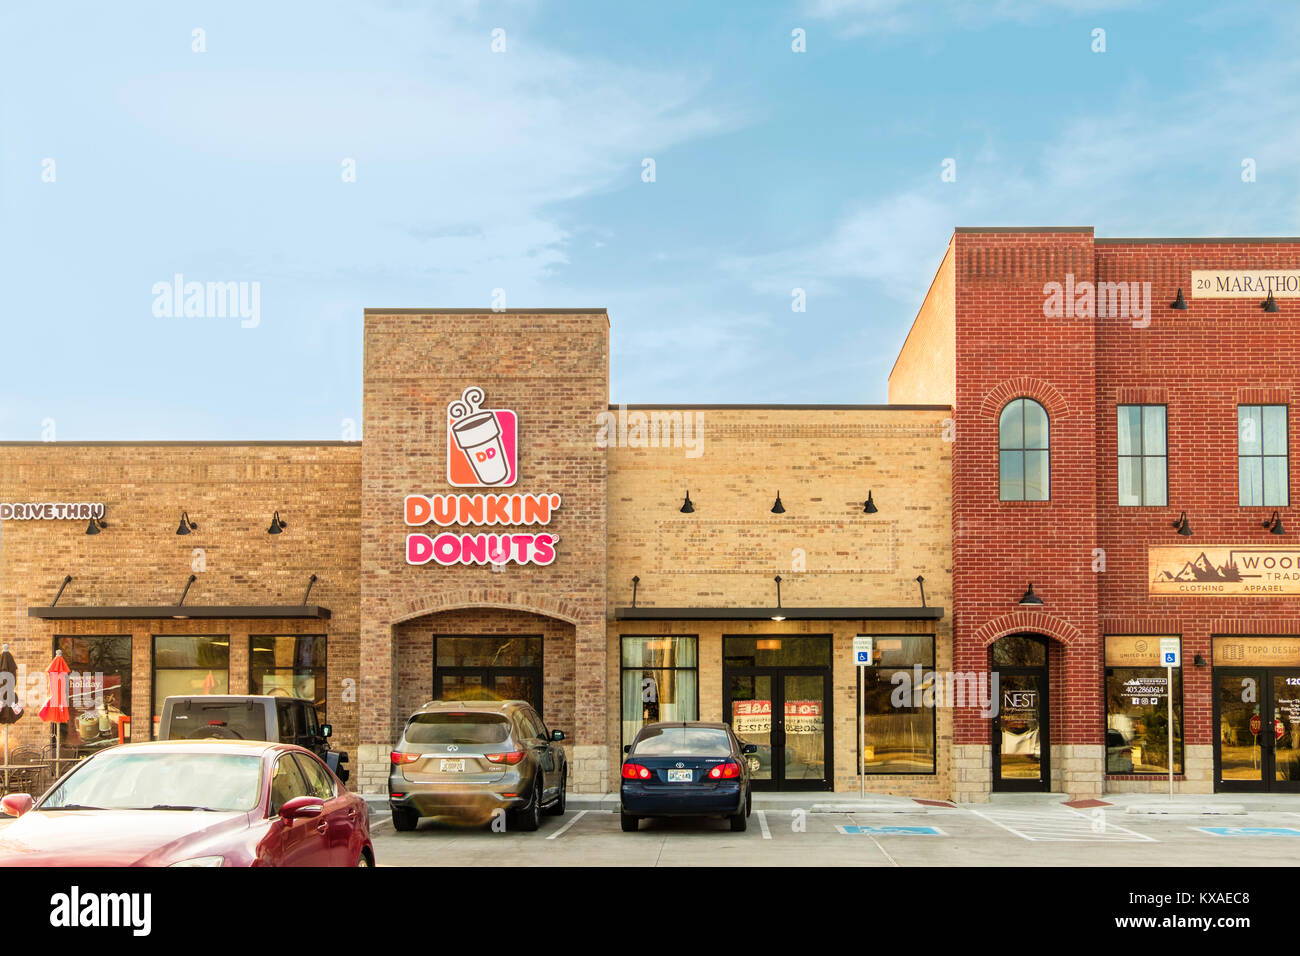 The entrance and exterior storefront of Dunkin' Donuts in Oklahoma City, Oklahoma, USA. Stock Photo